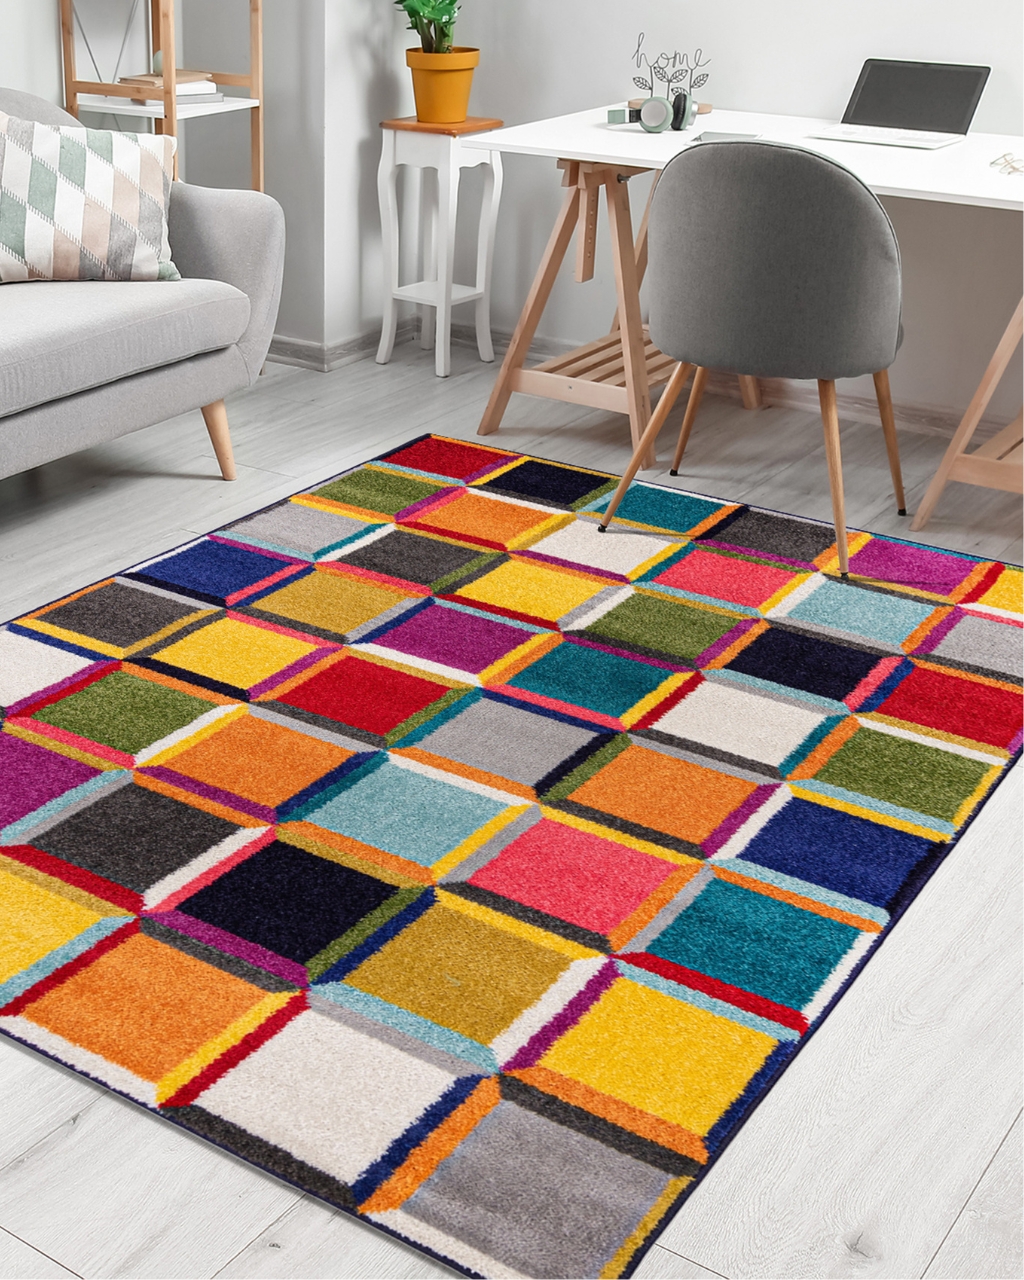 kolorowe dywany